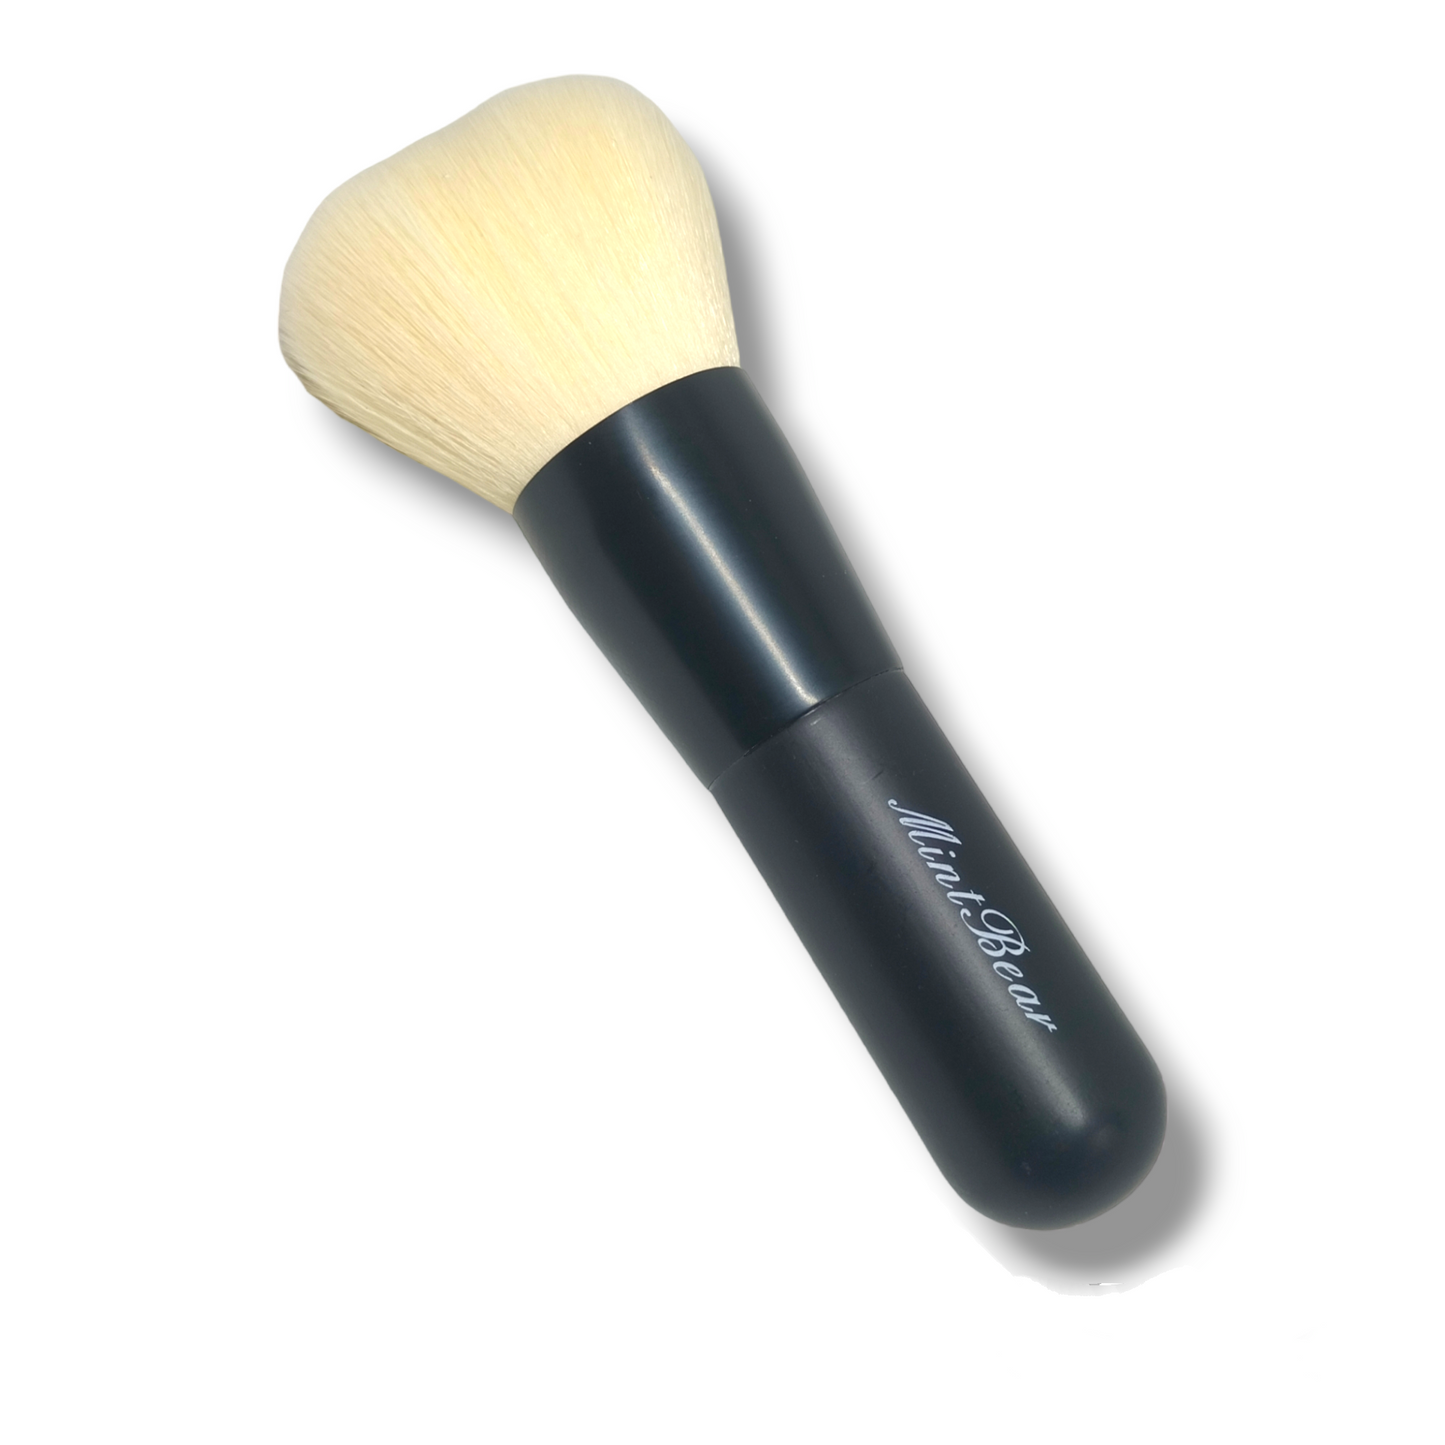 MintBear Professional Powder / Blush Applicator Brush FatMan